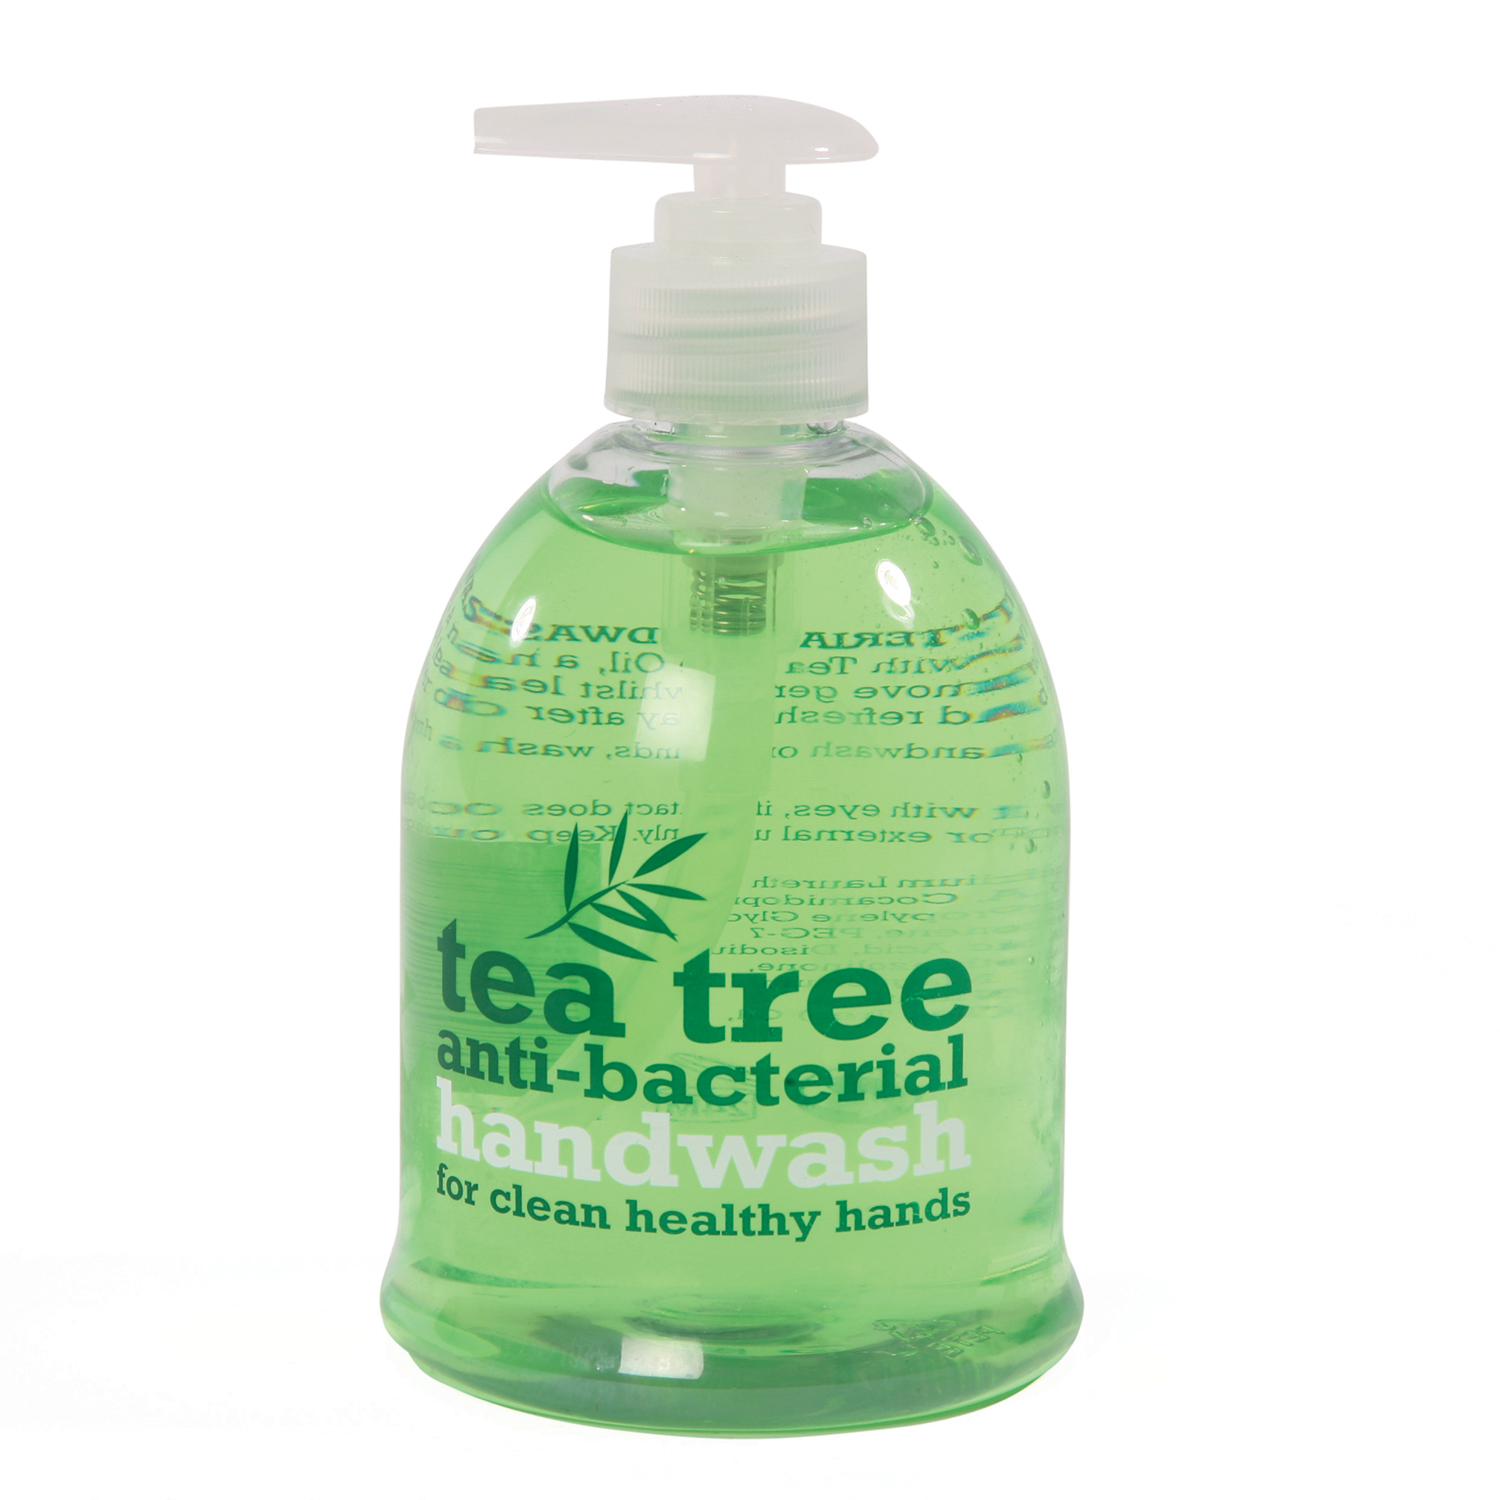 Antibacterial Tea Tree Handwash Image